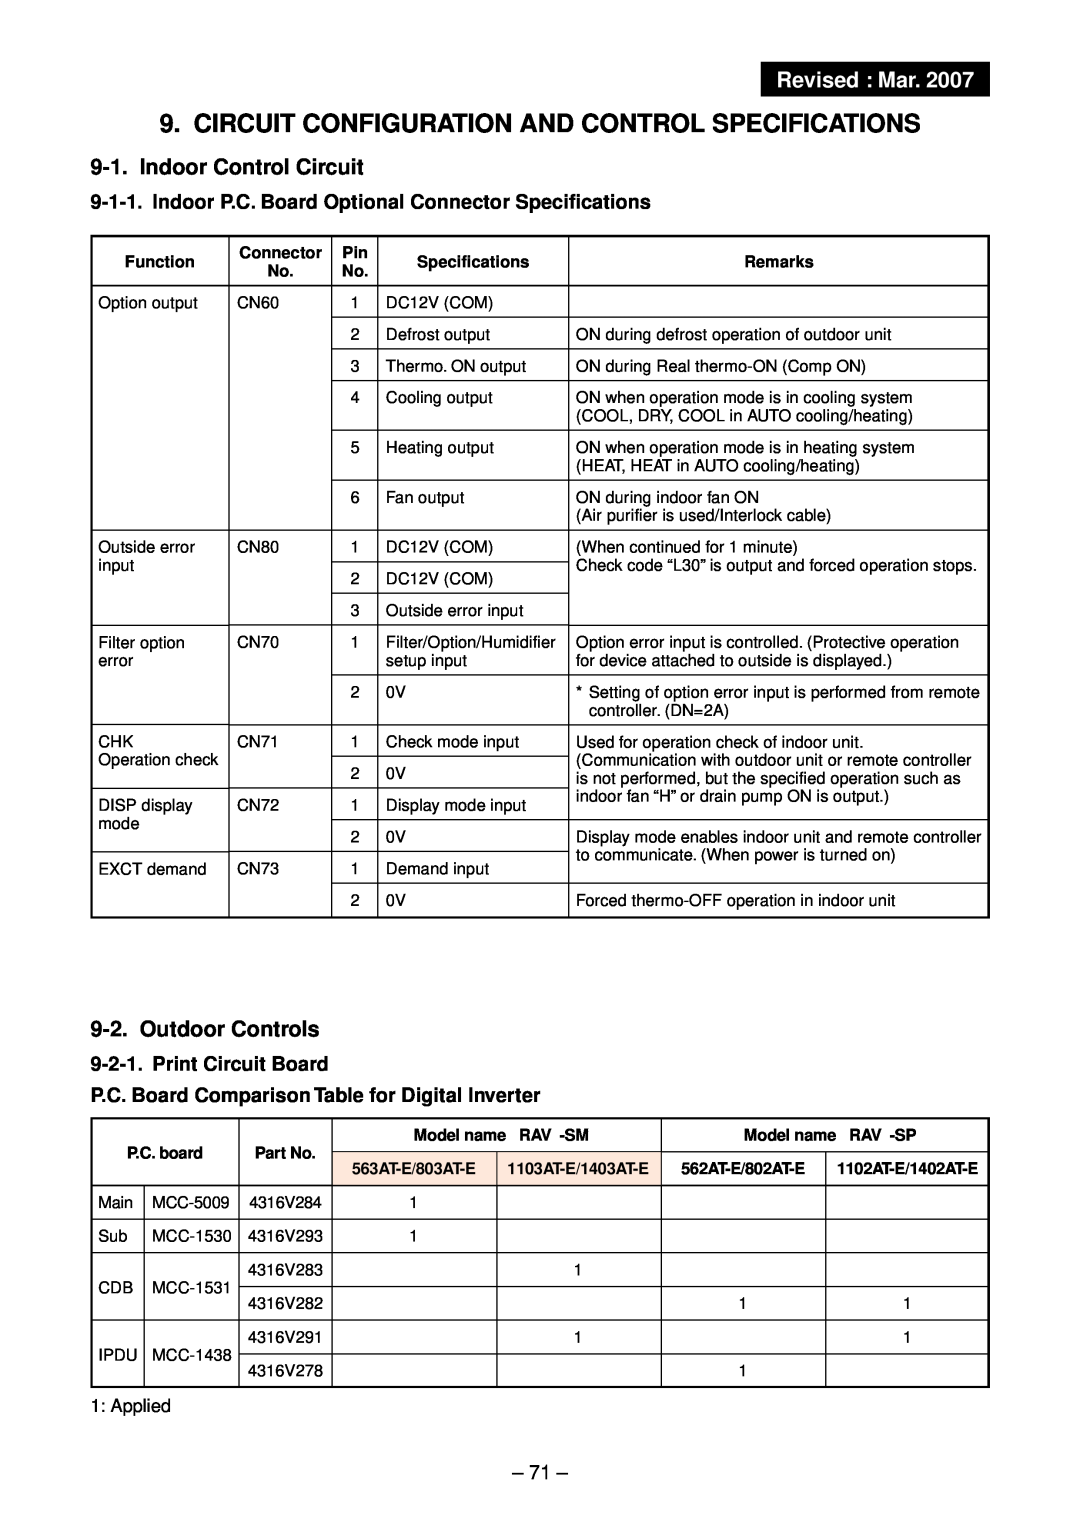 Toshiba RAV-SM1102BT-E, RAV-SM1102CT-E Circuit Configuration And Control Specifications, Revised Mar, Print Circuit Board 